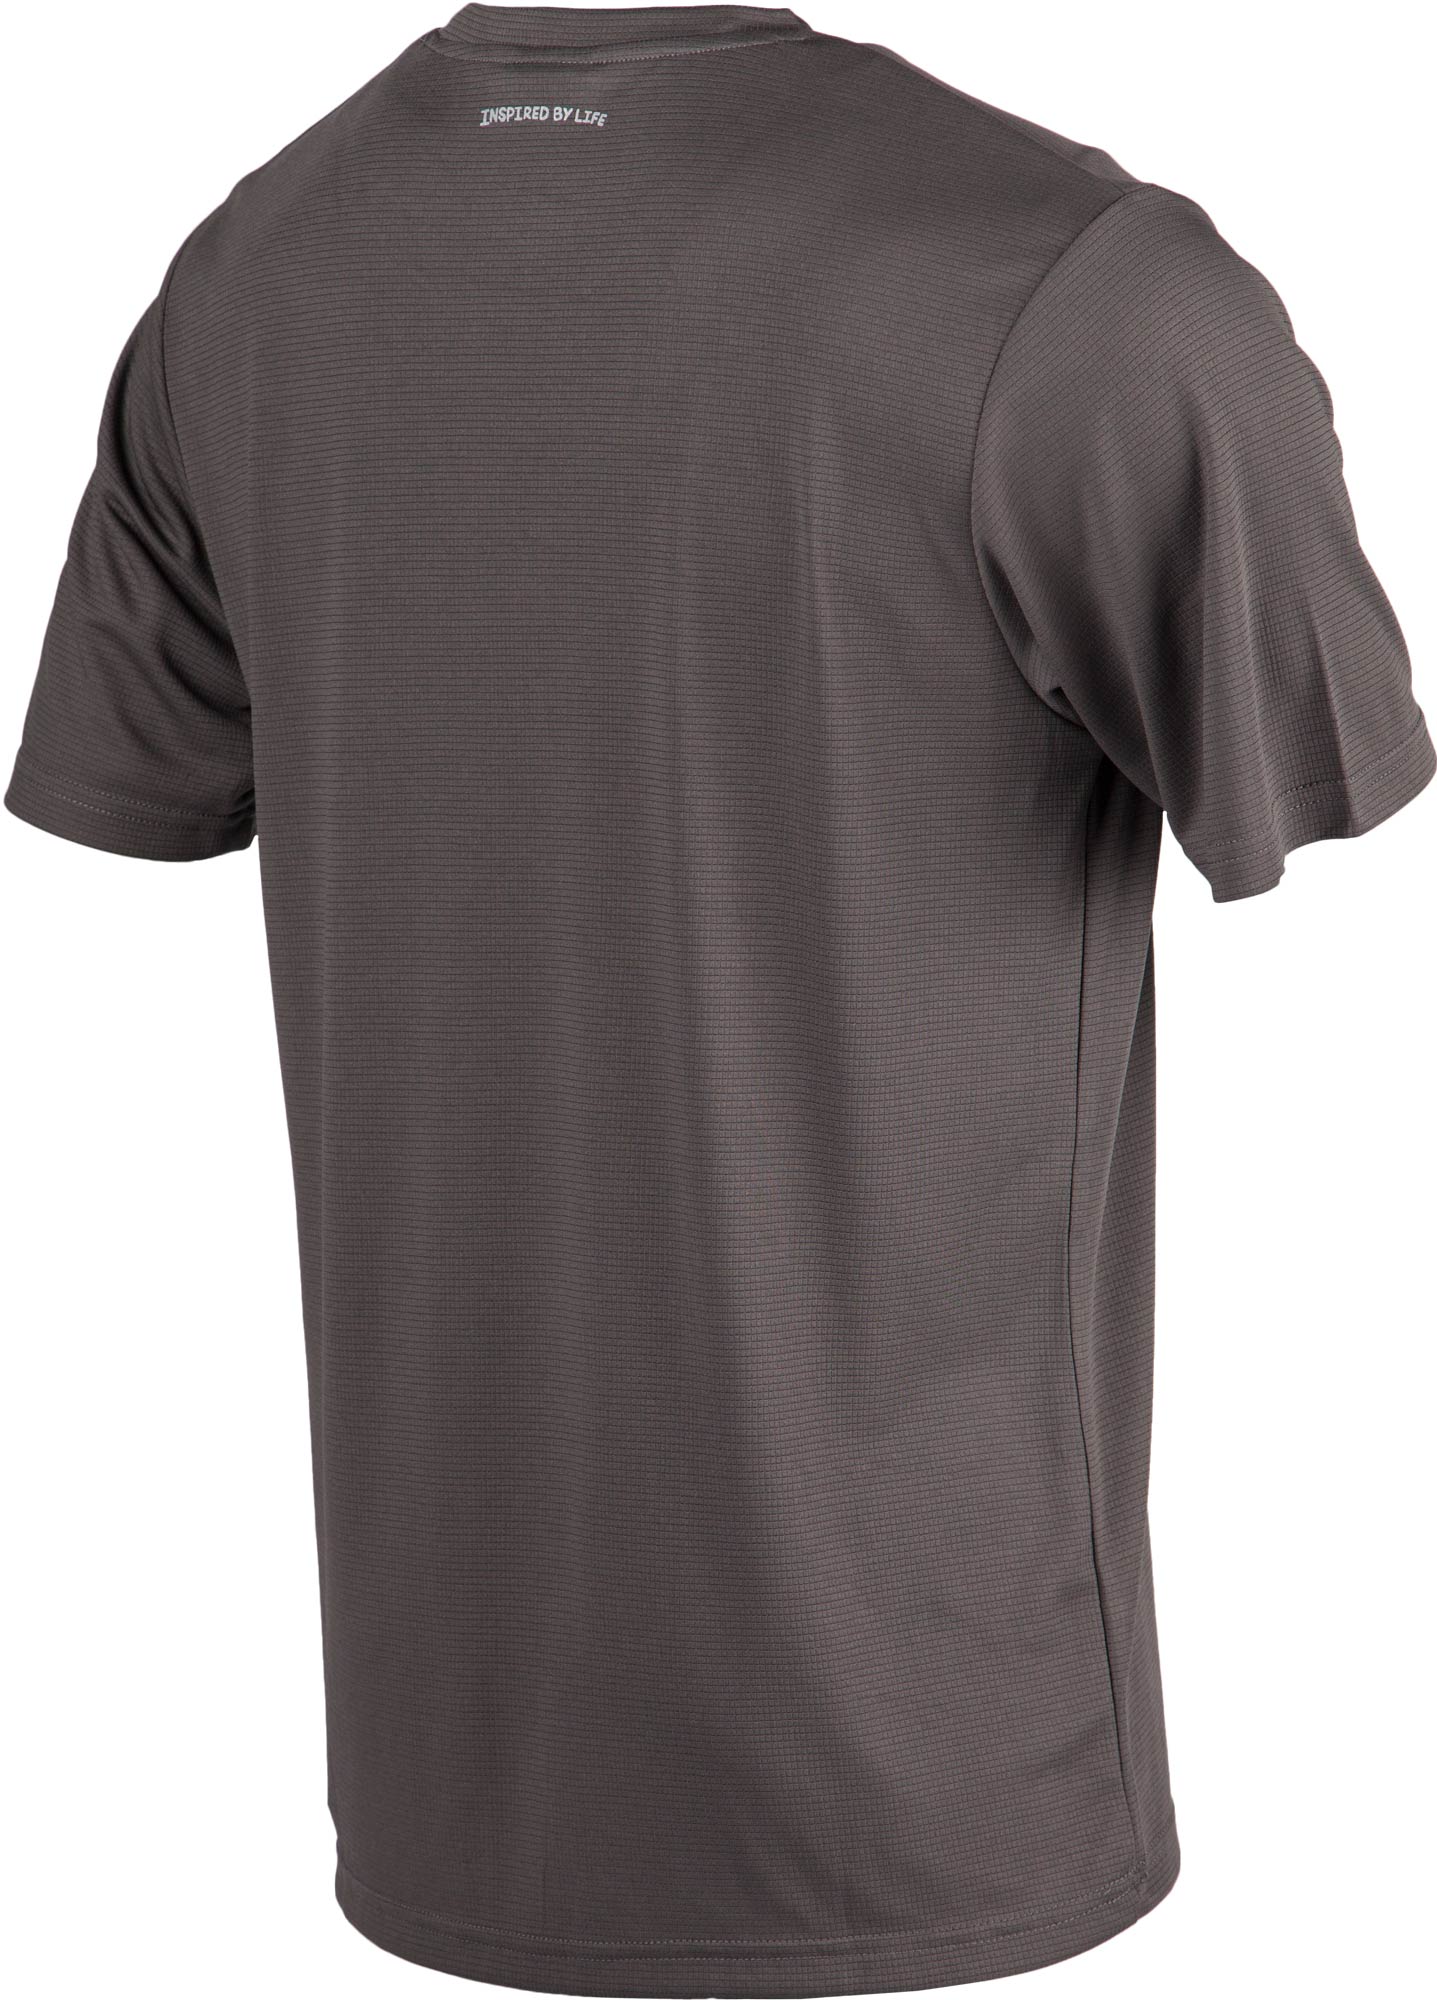 MEMMO MEN TEE - Pánské technické triko s krátkým rukávem